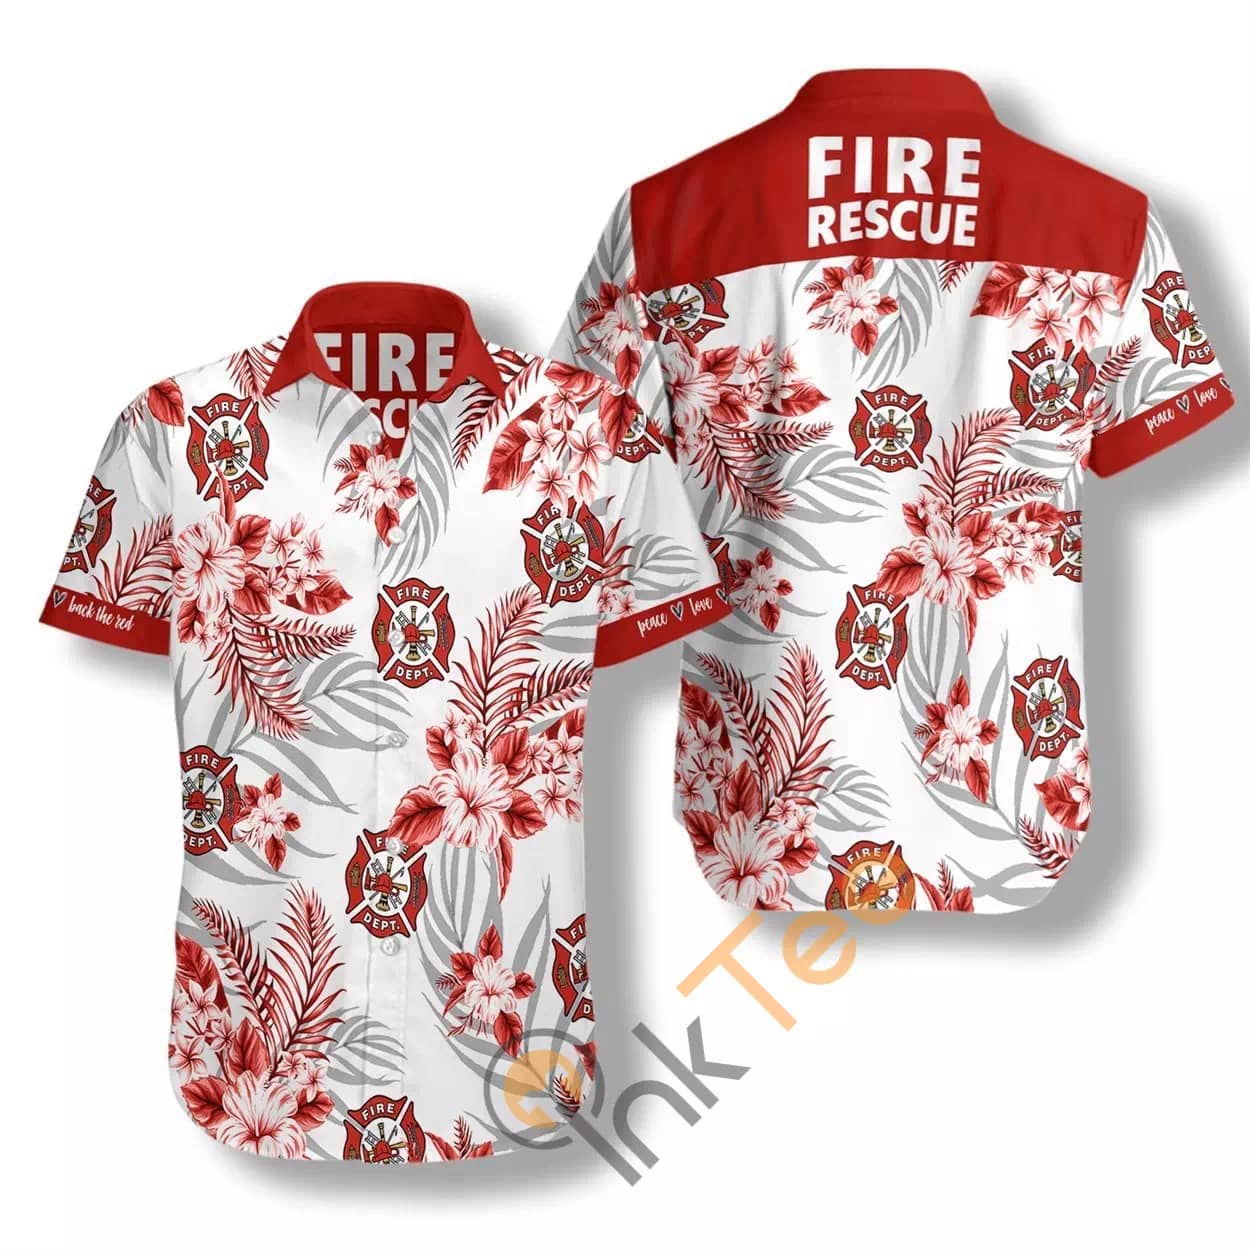 Firefighter Fire Rescue Ez03 N485 Hawaiian shirts